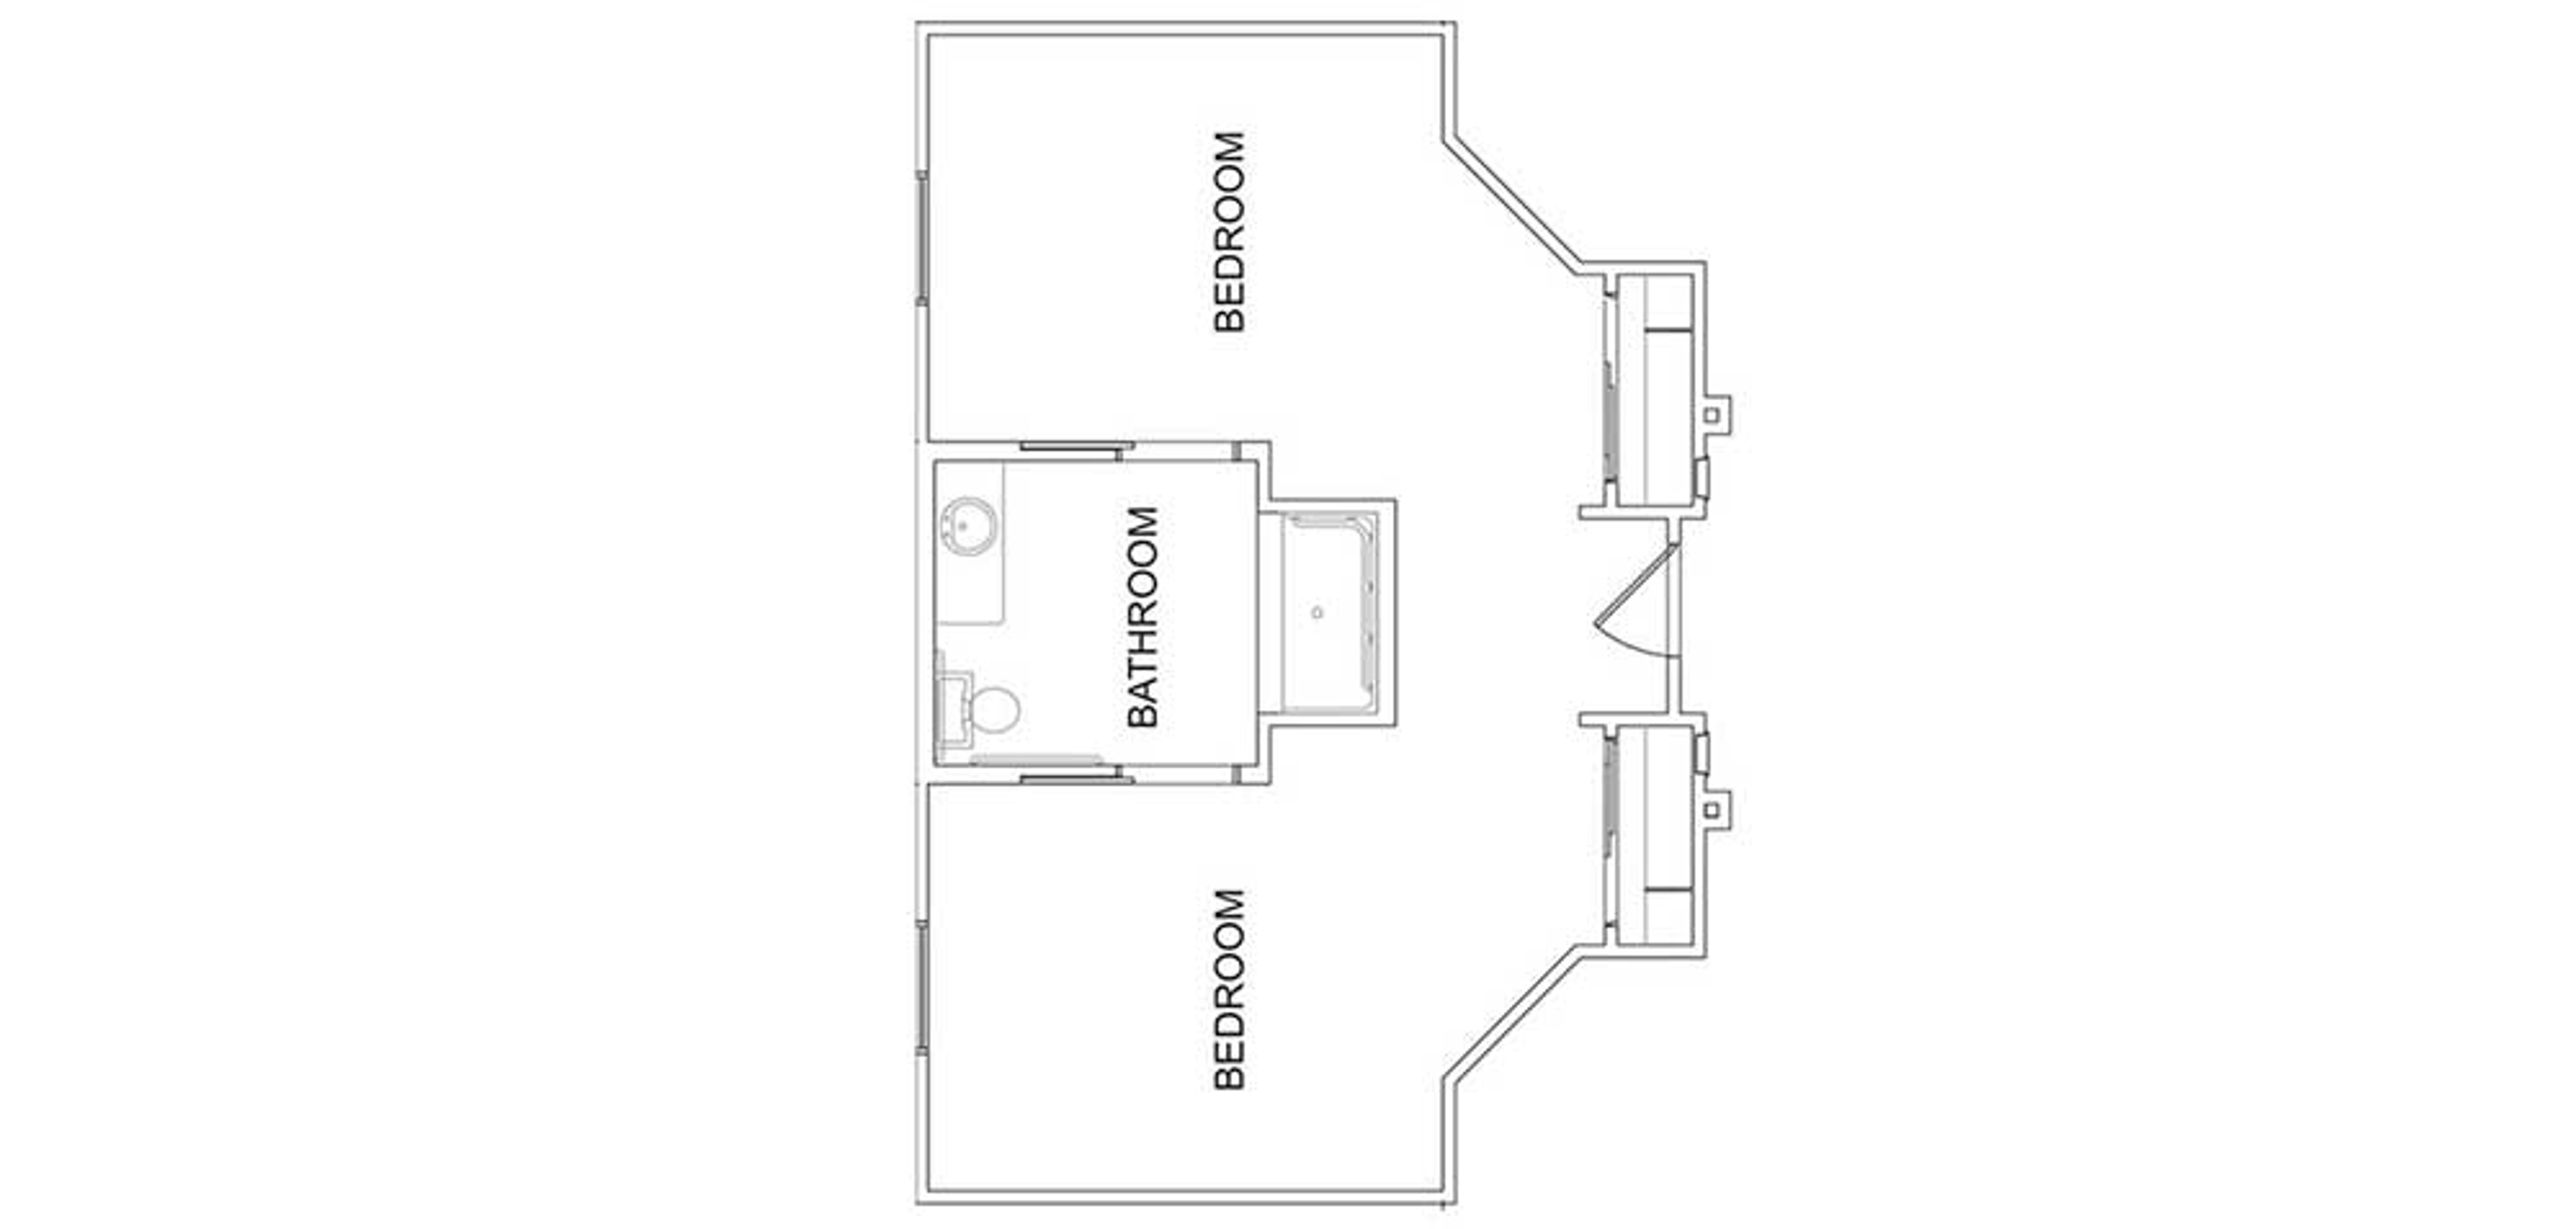 Floorplan - Magnolia Court - 2B 1B Semi-private Memory Care 